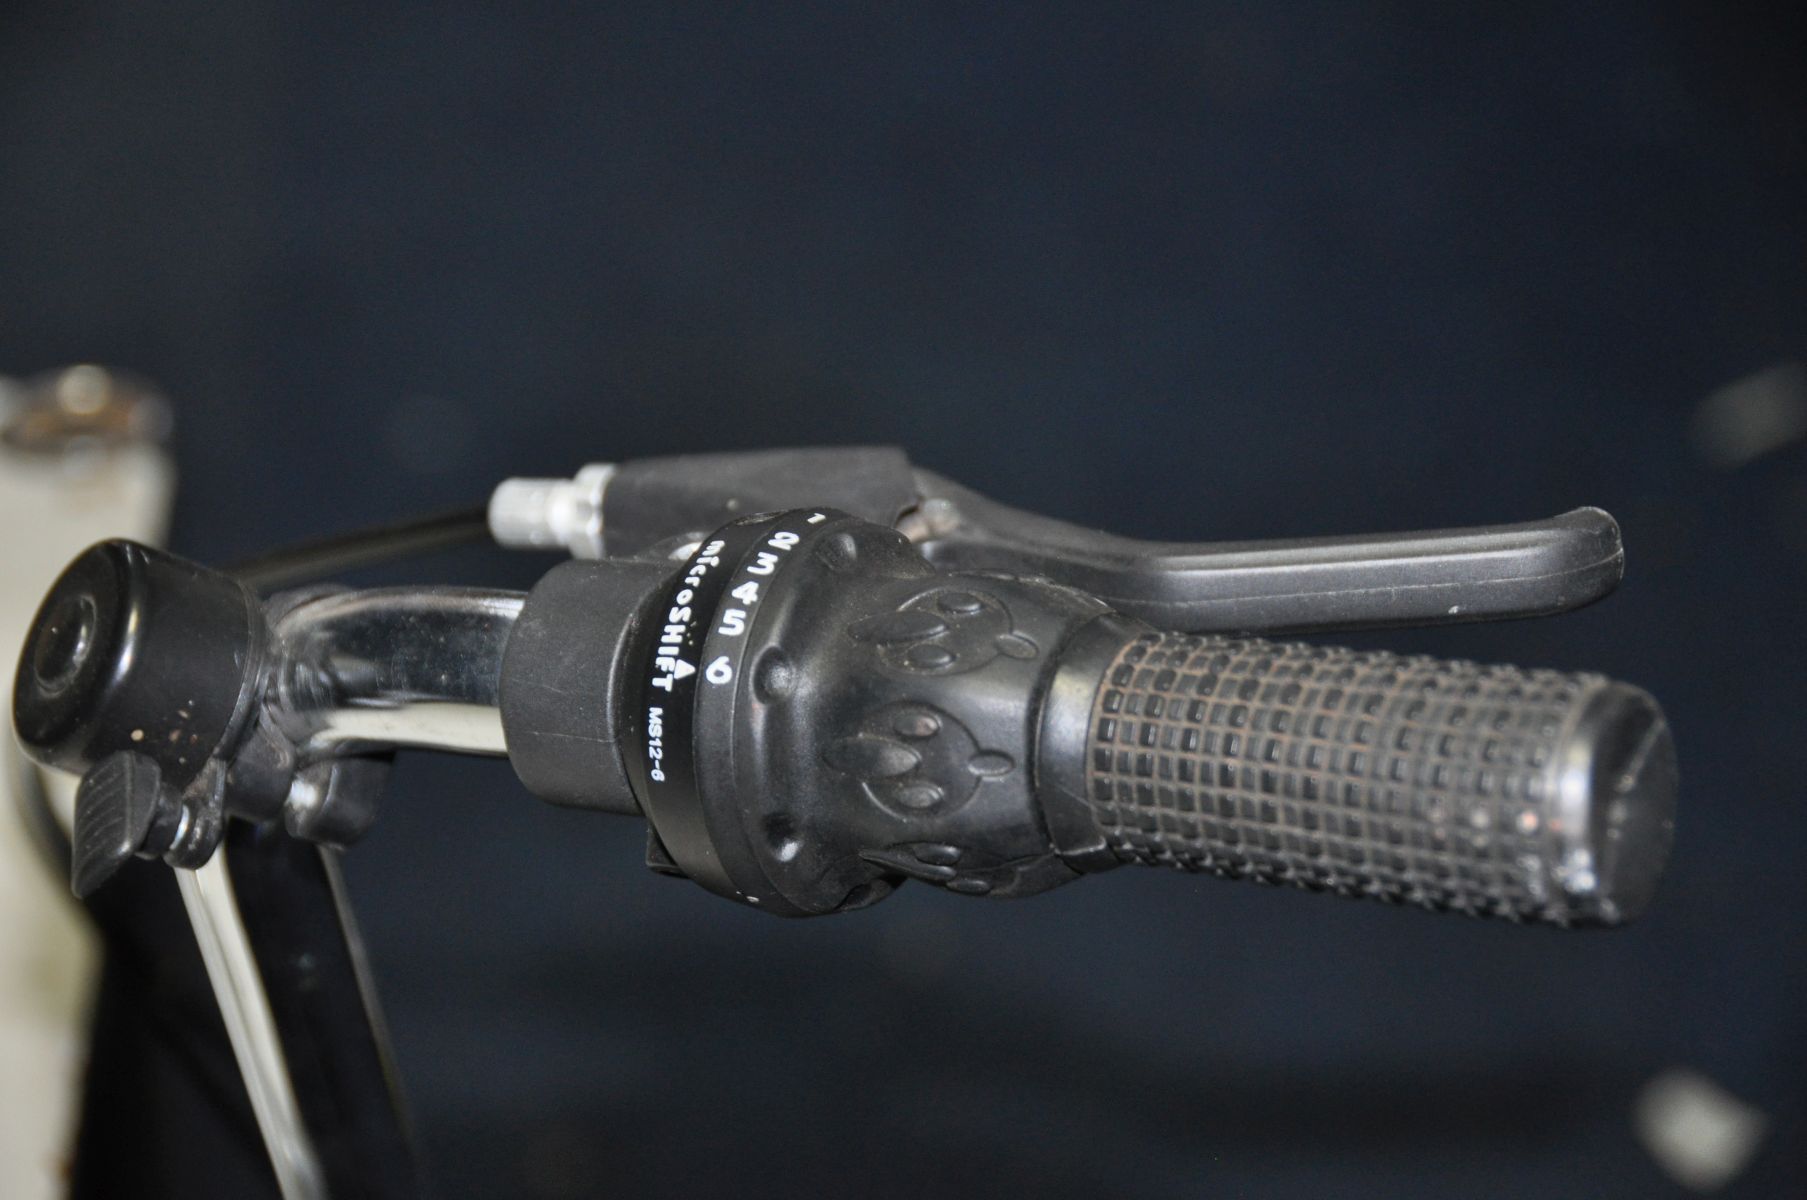 A CHALLENGE TORNADO FOLDING BIKE with 6 speed grip shift Shimano gears, 20in wheels min seat - Image 3 of 3